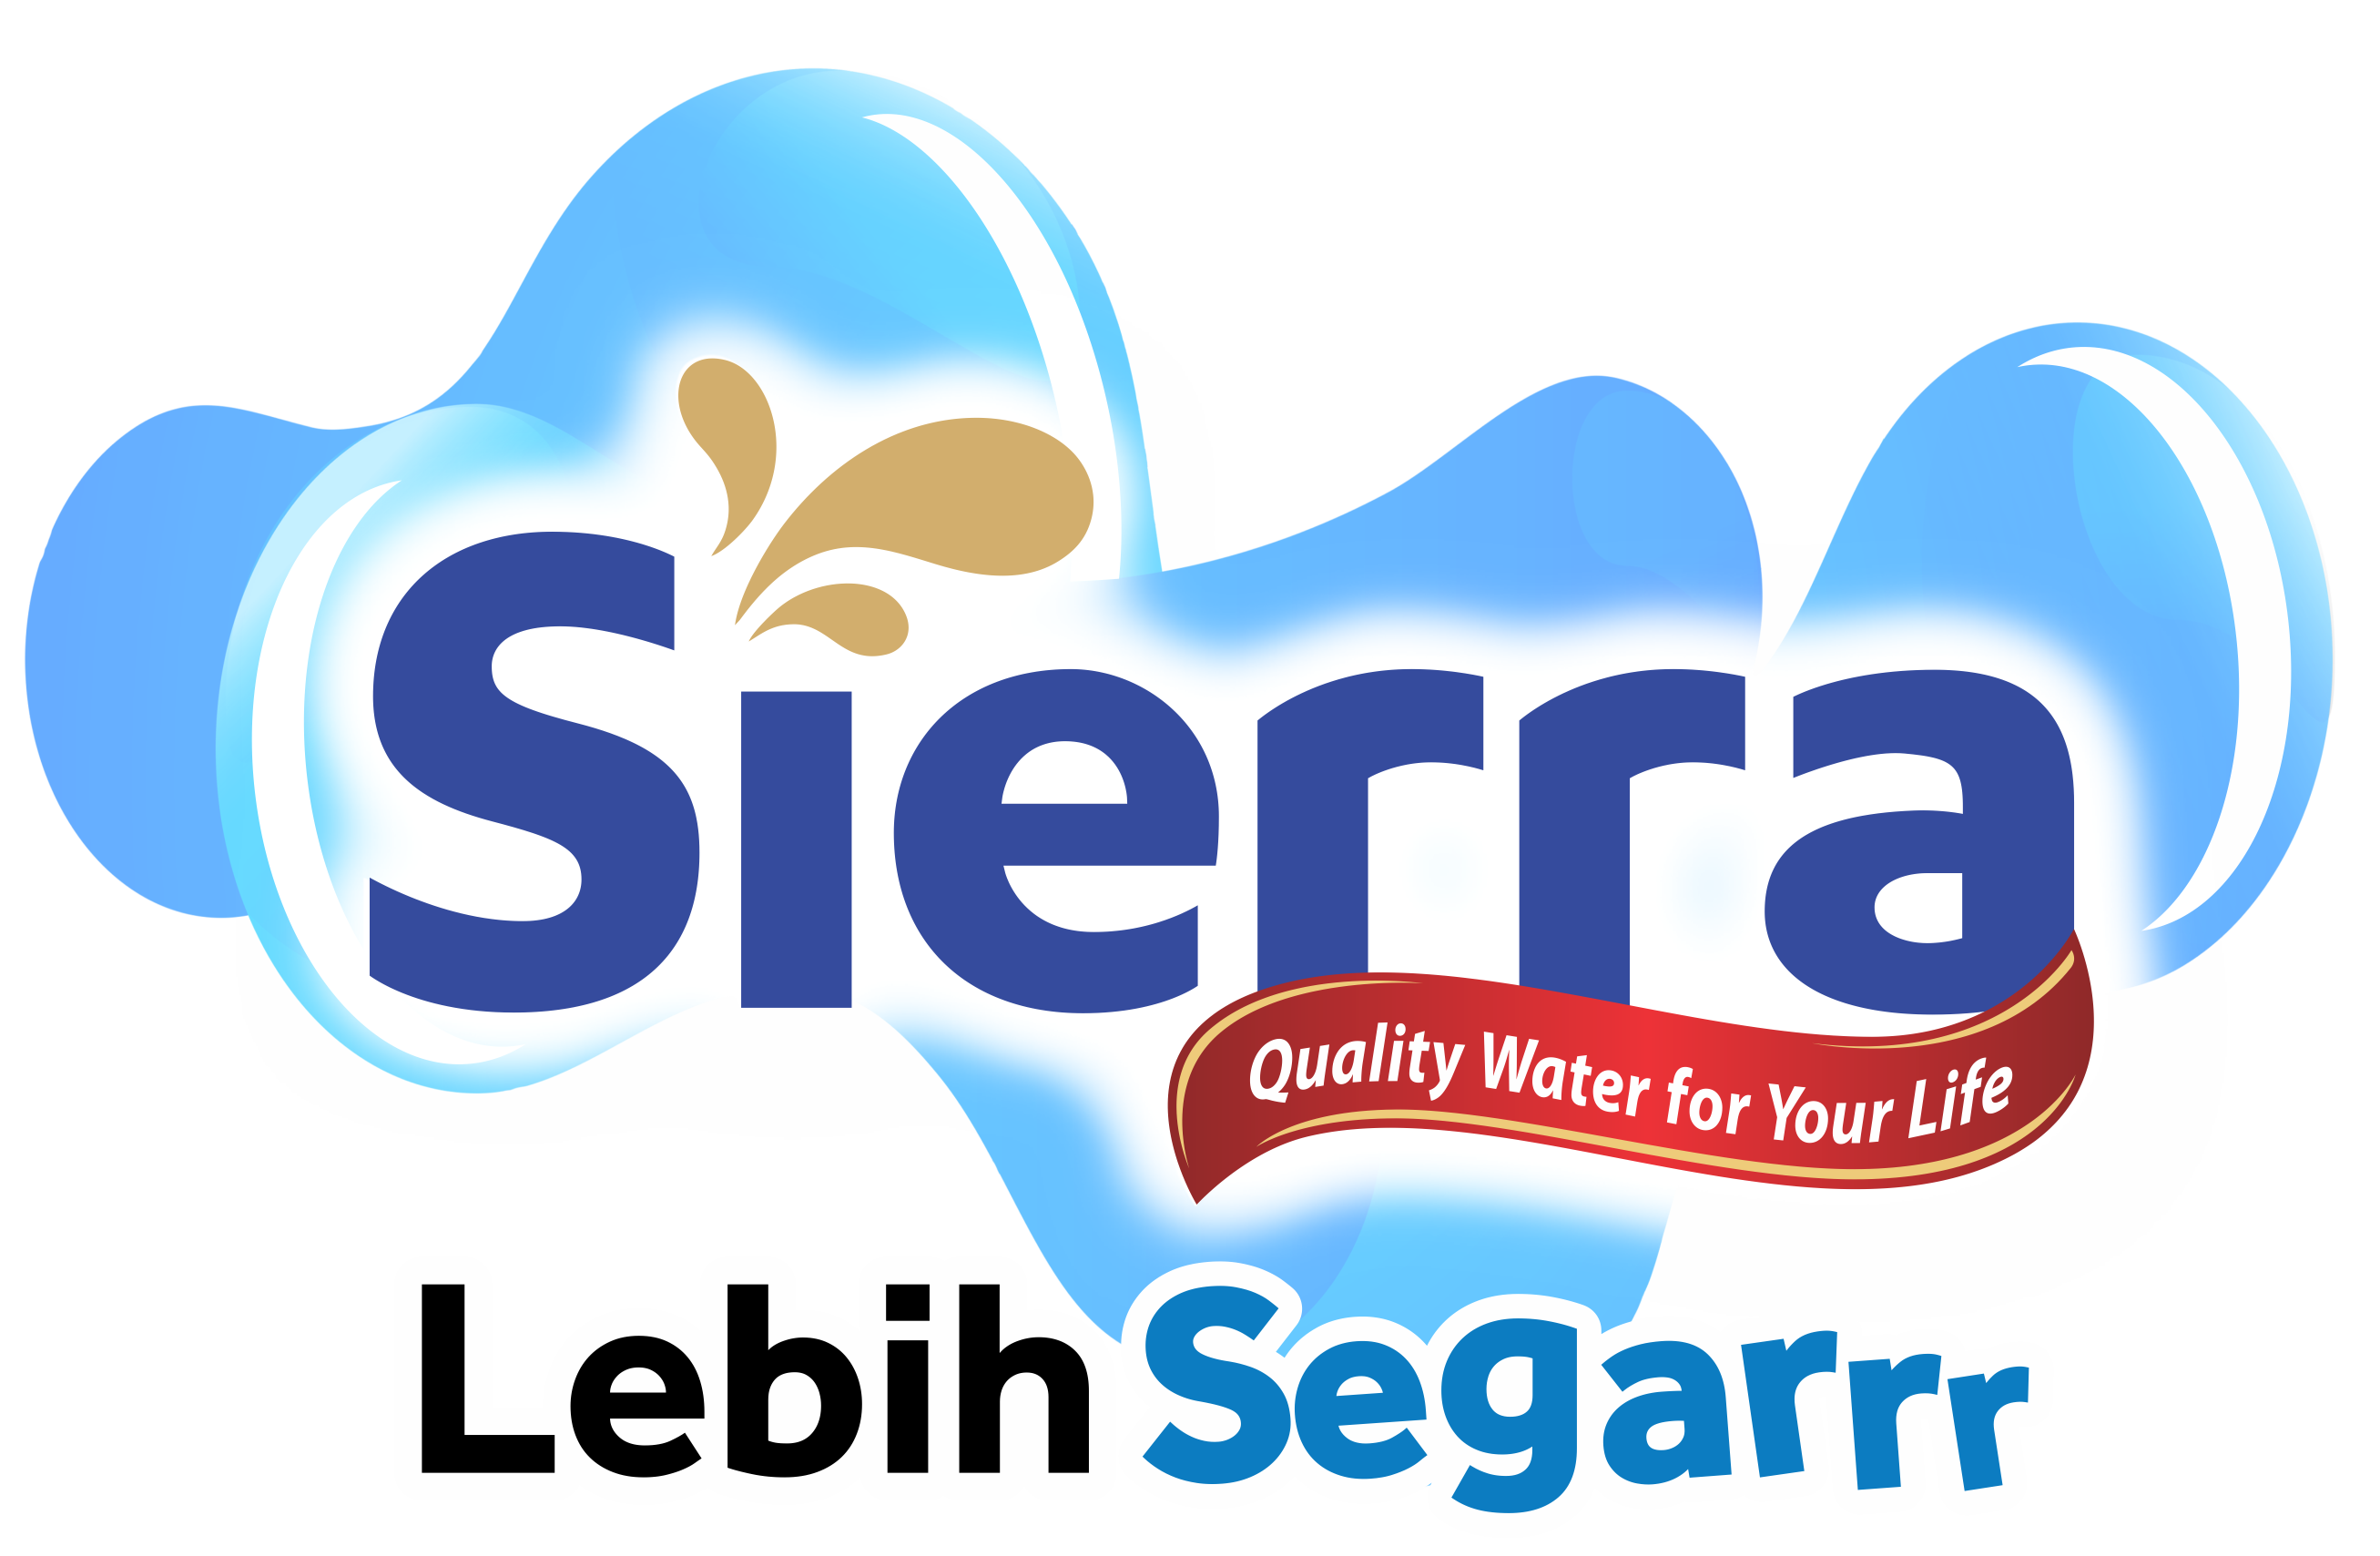 Sierra Lebih segar [with pettern logo]